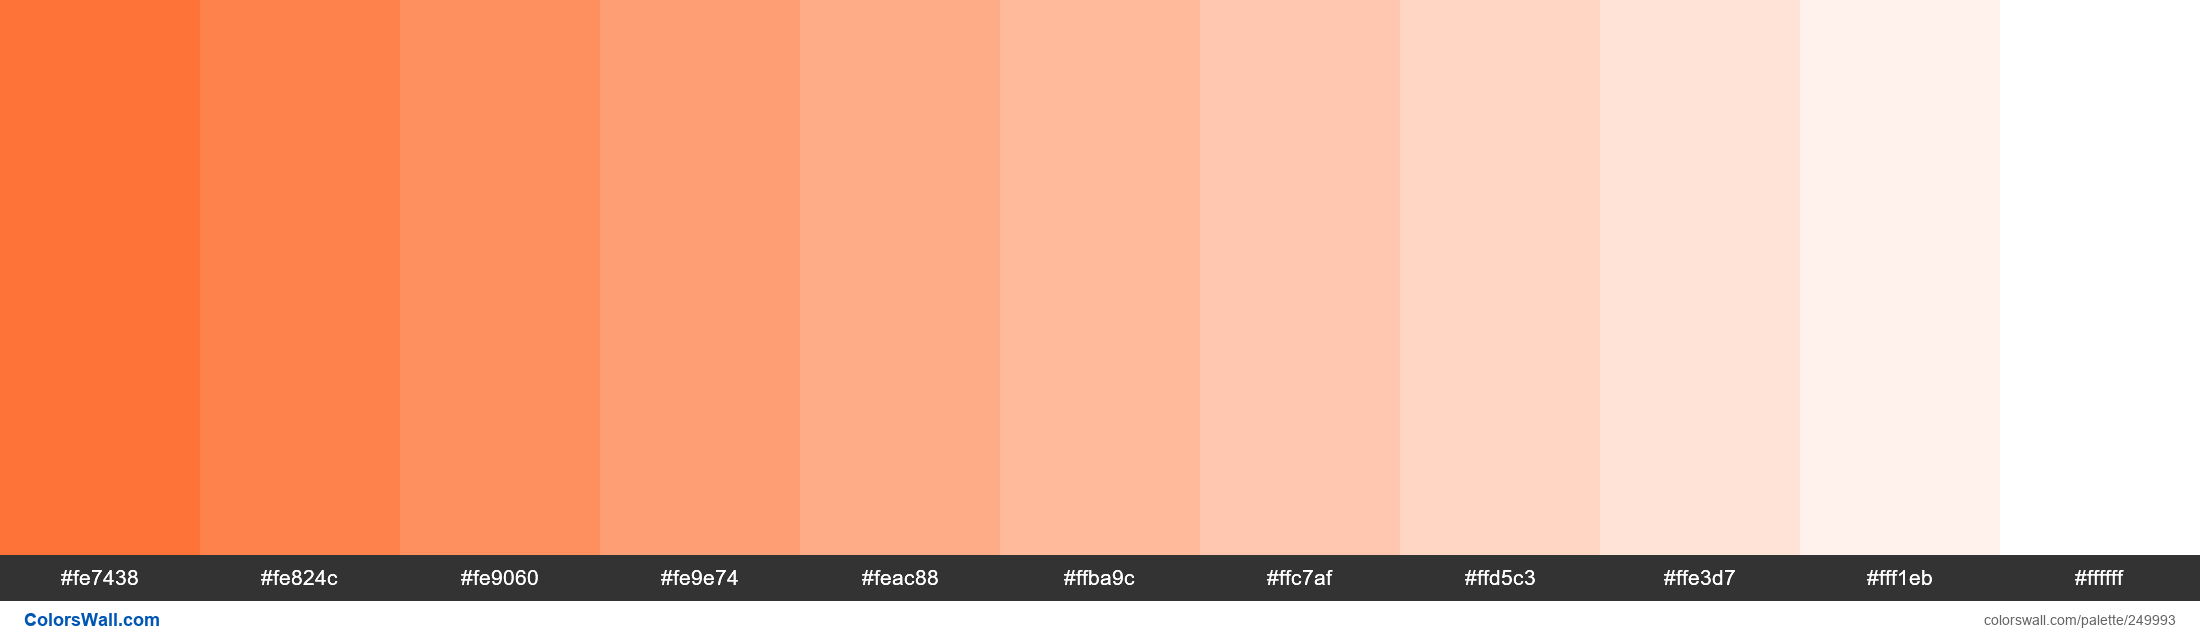 Crayola Tiger Orange / #cb7119 Esquema de código de cores Hex, Paletes e  Tintas